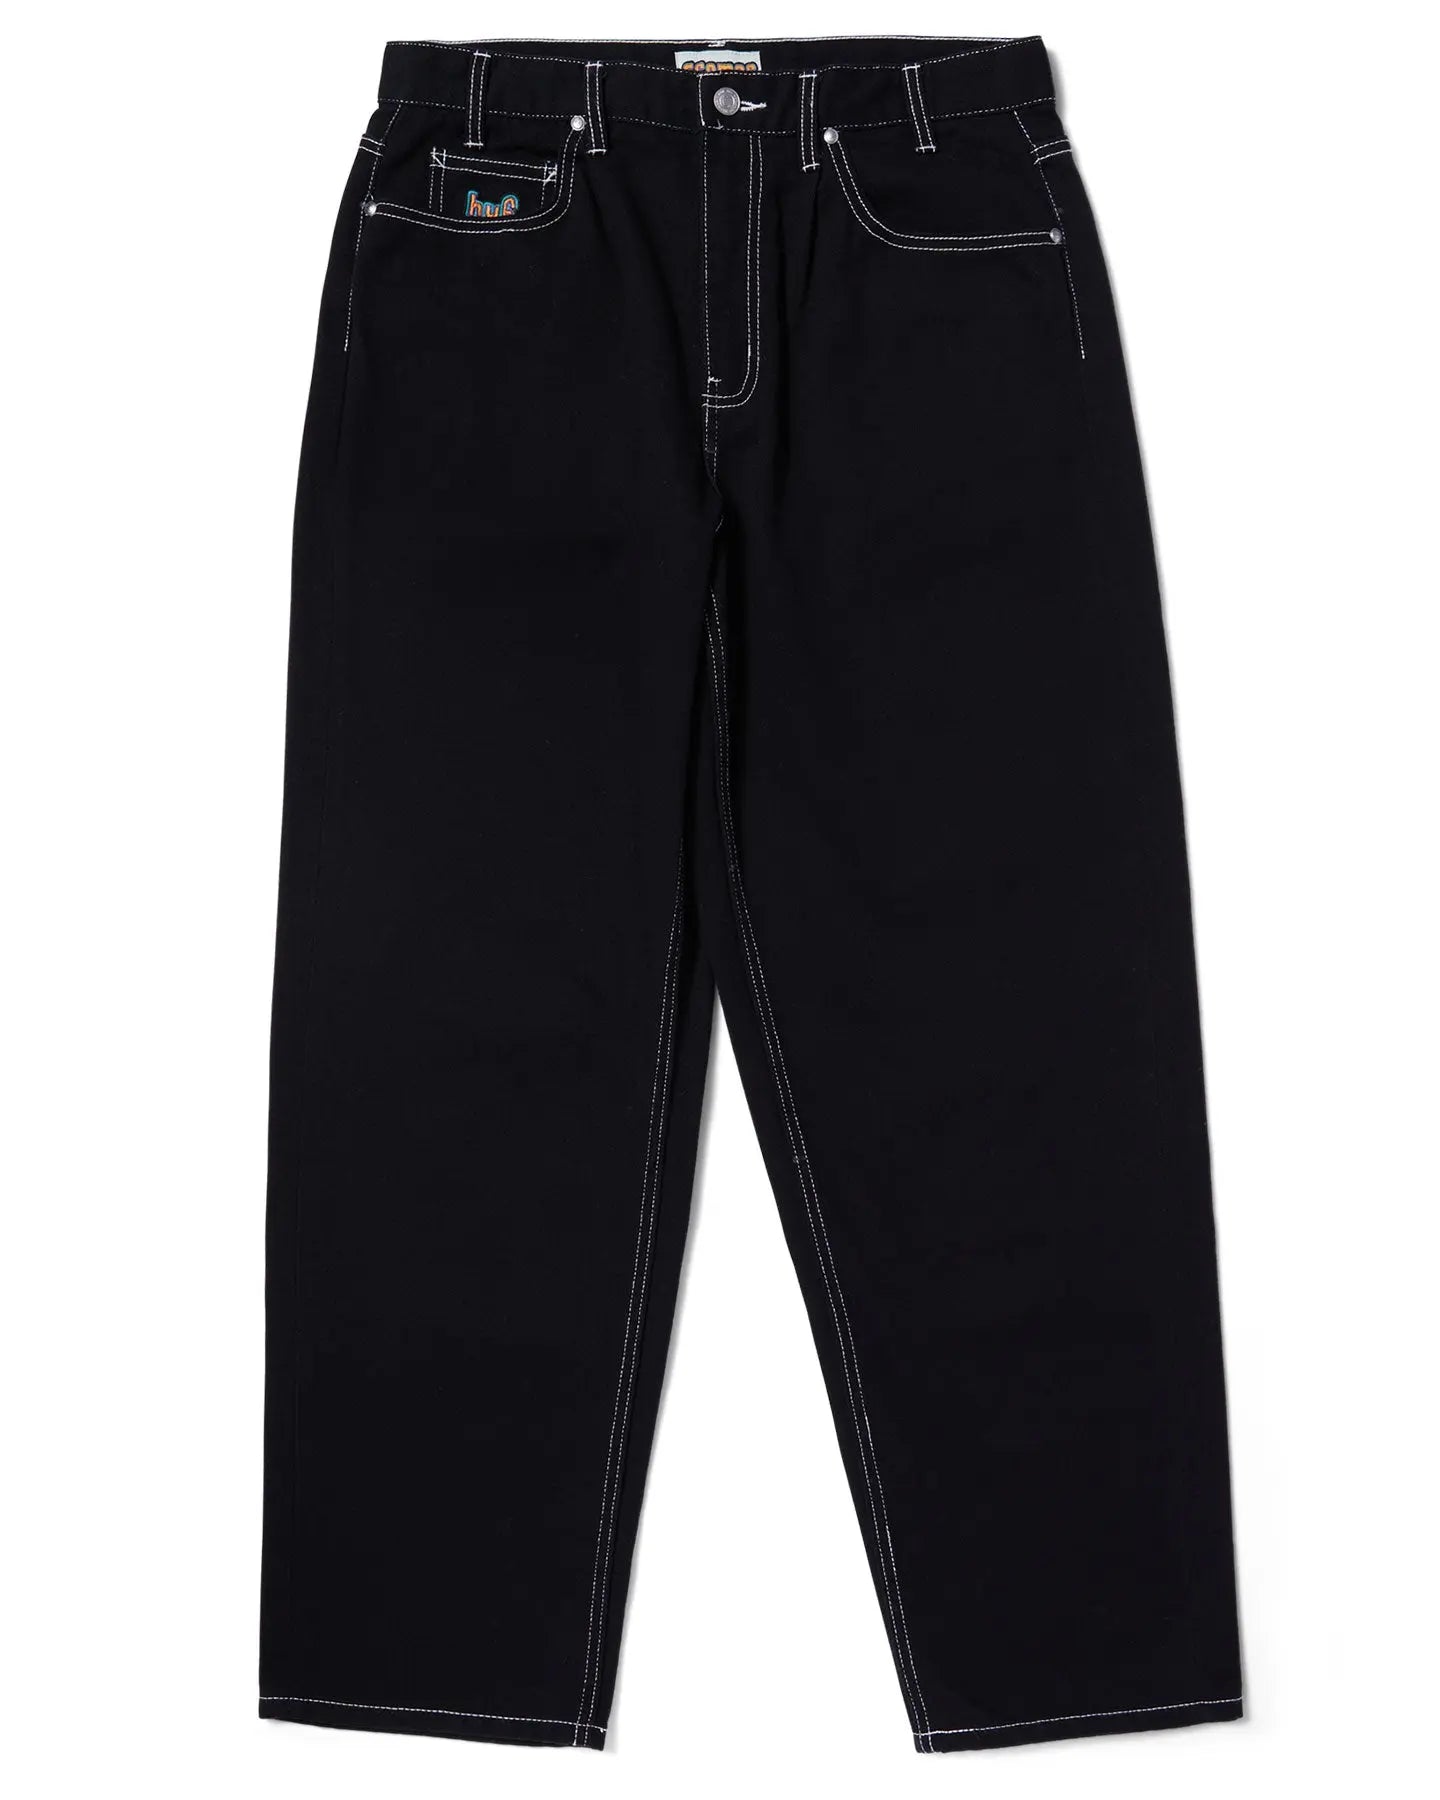 HUF Cromer Pant - Black / White Pants